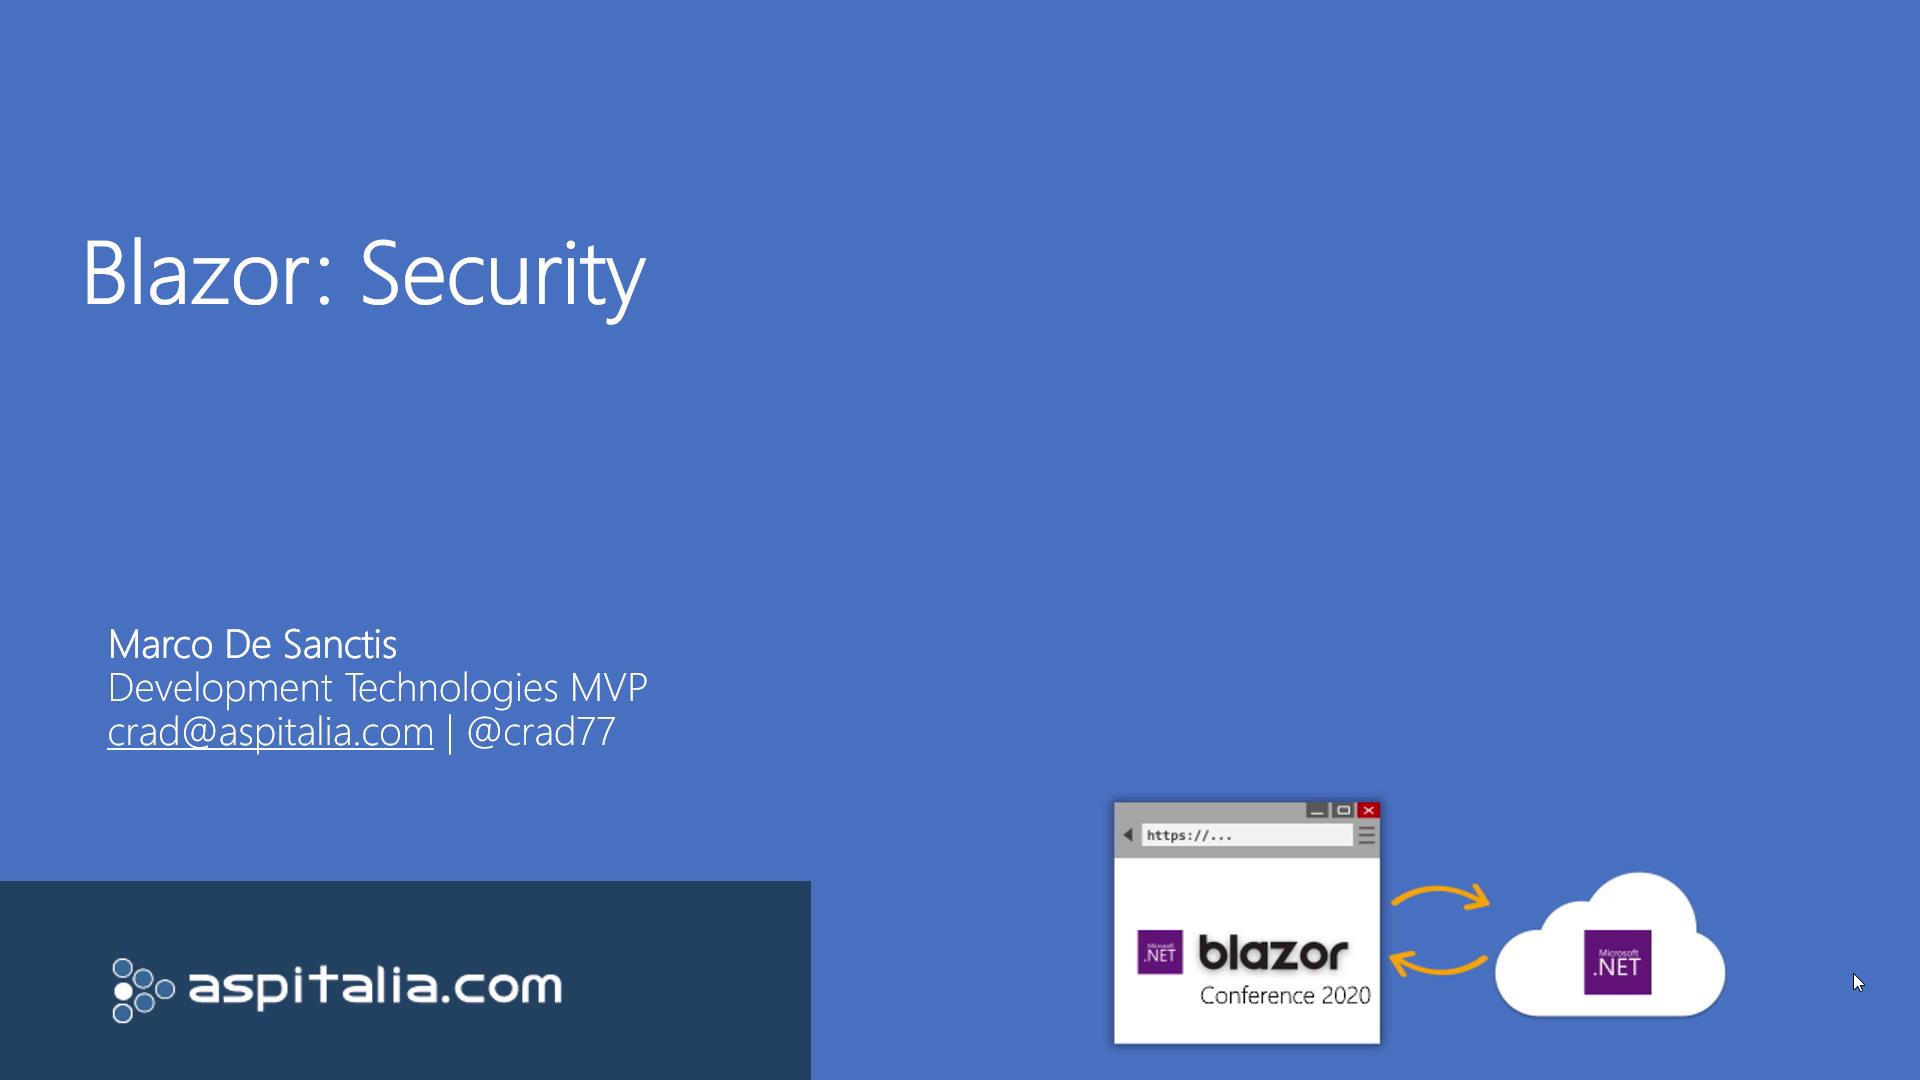 #blazor: #security https://aspit.co/b0n di @crad77 #webassembly